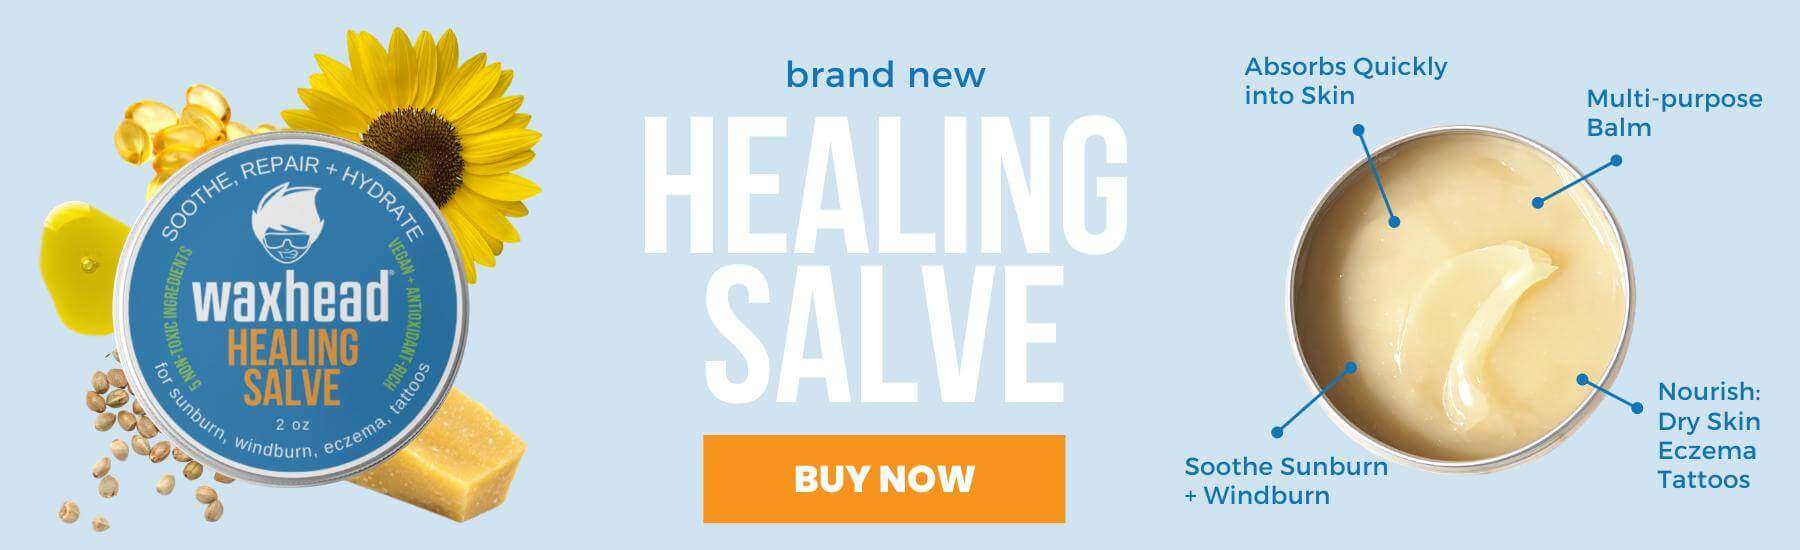 waxhead healing salve